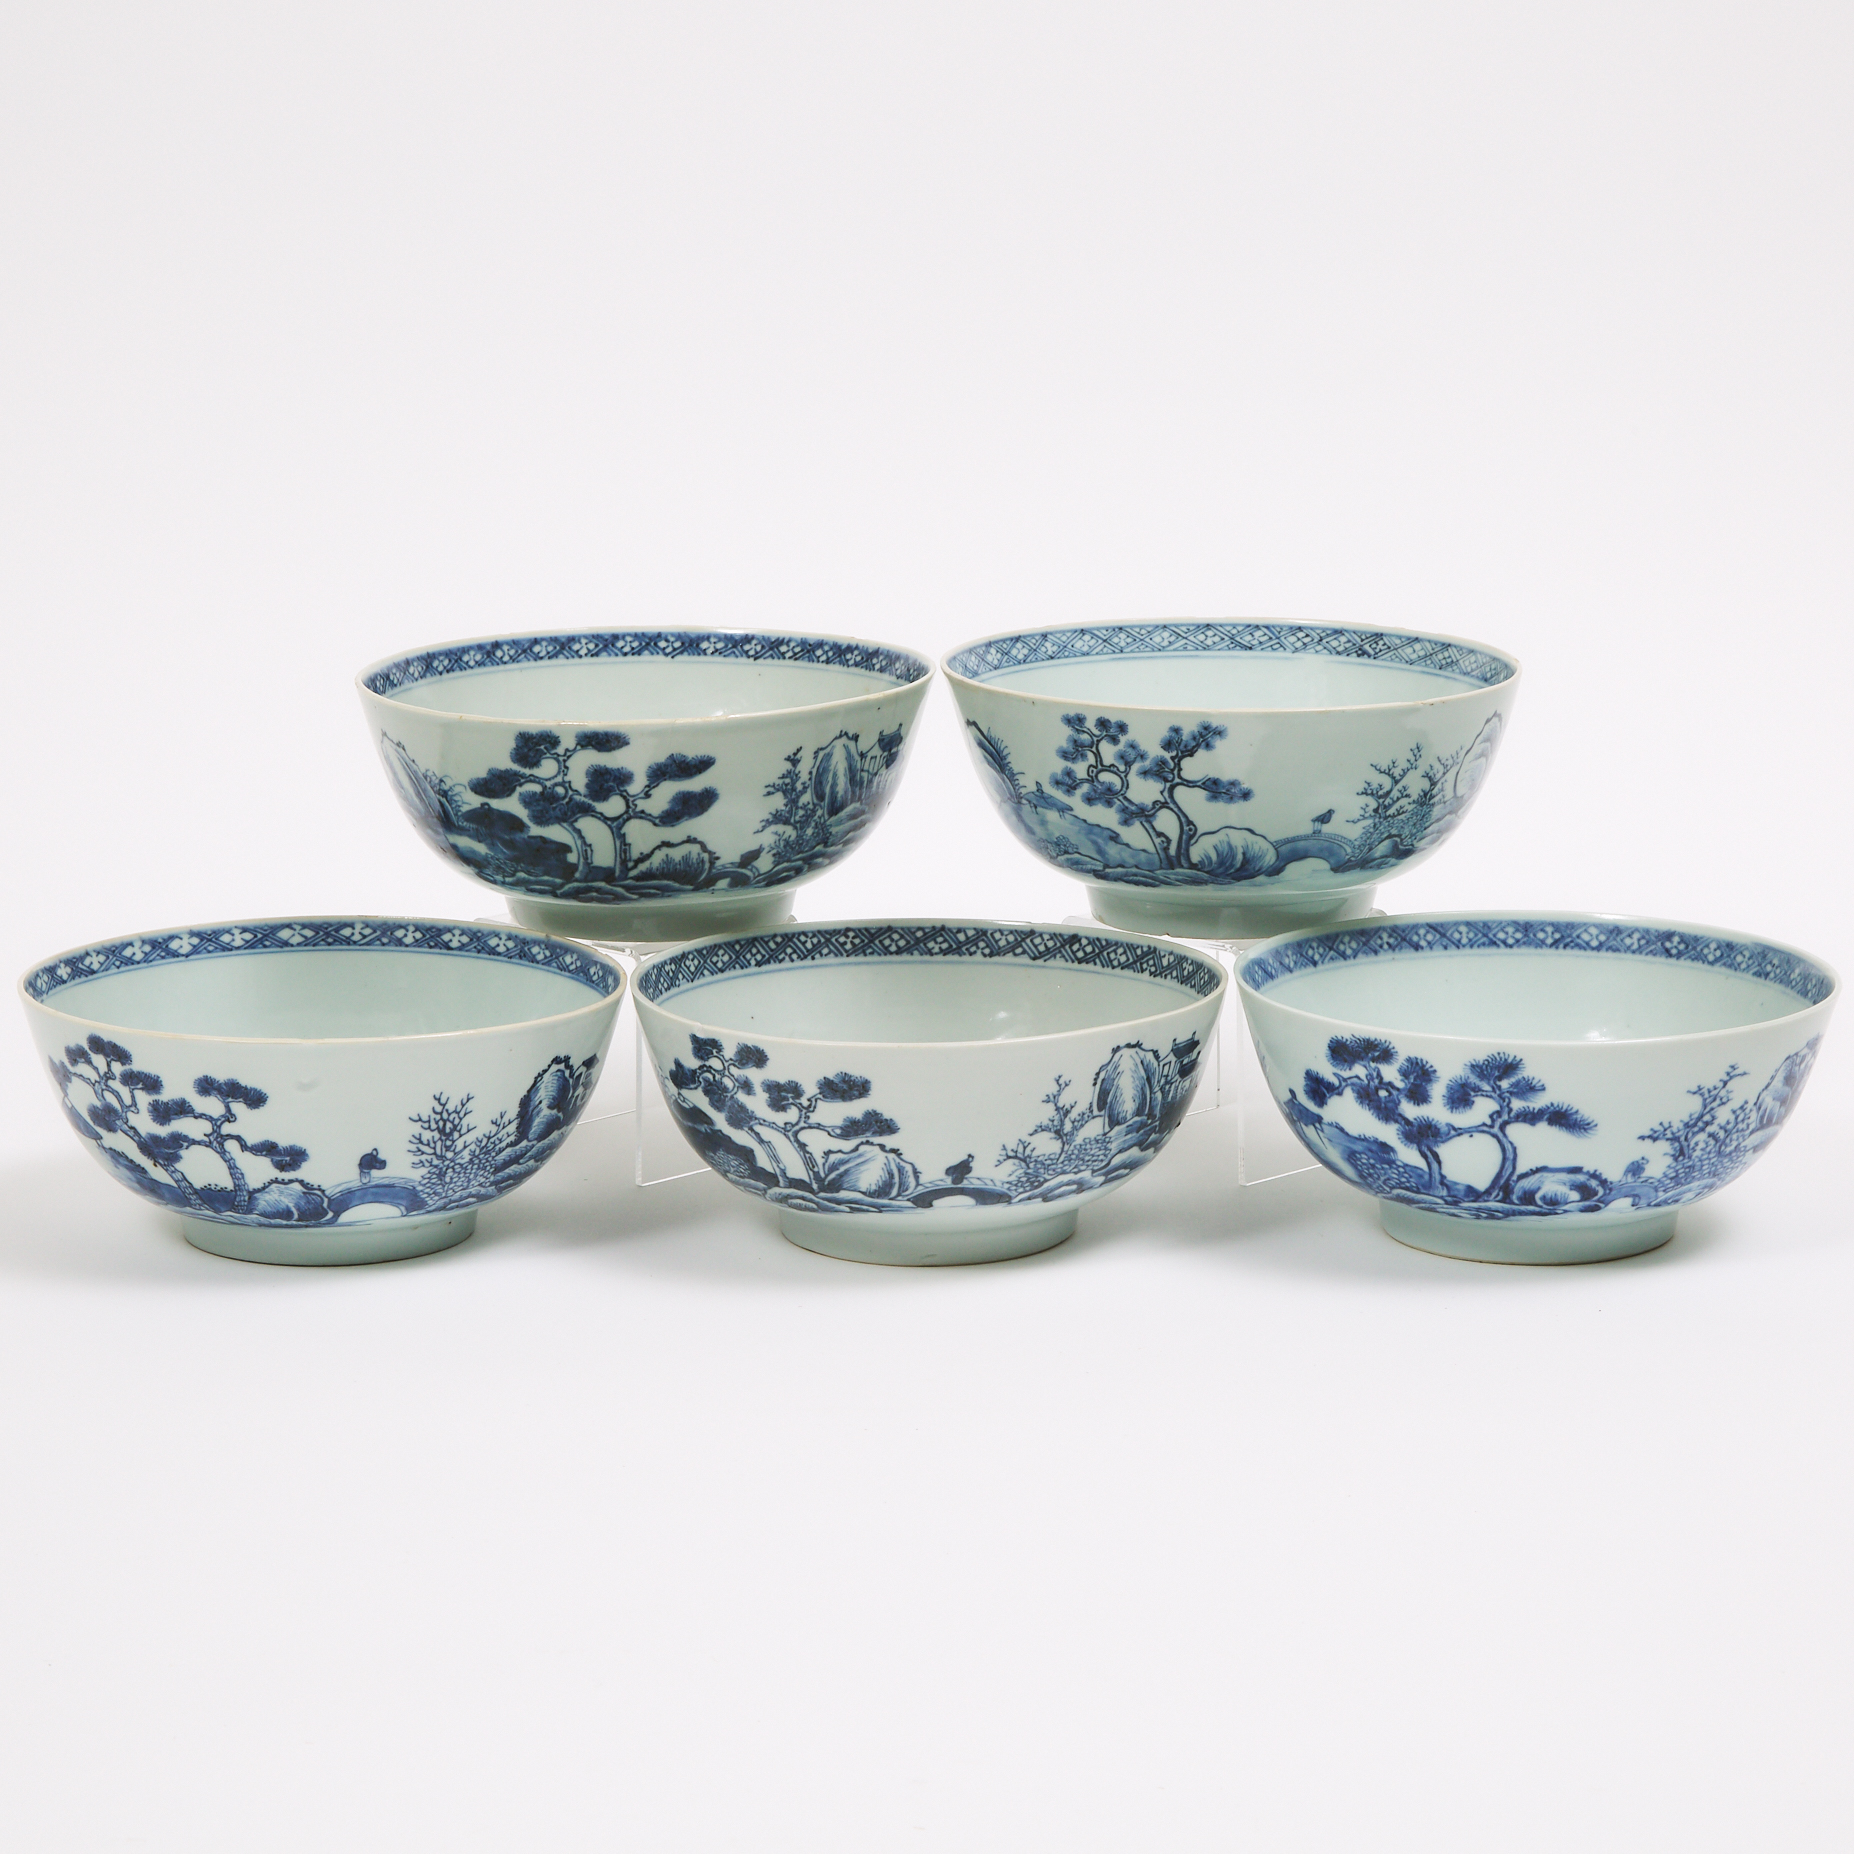 A Set of Five 'Scholar on Bridge' Pattern Large Bowls from the Nanking Cargo, Qianlong Period, Circa 1750